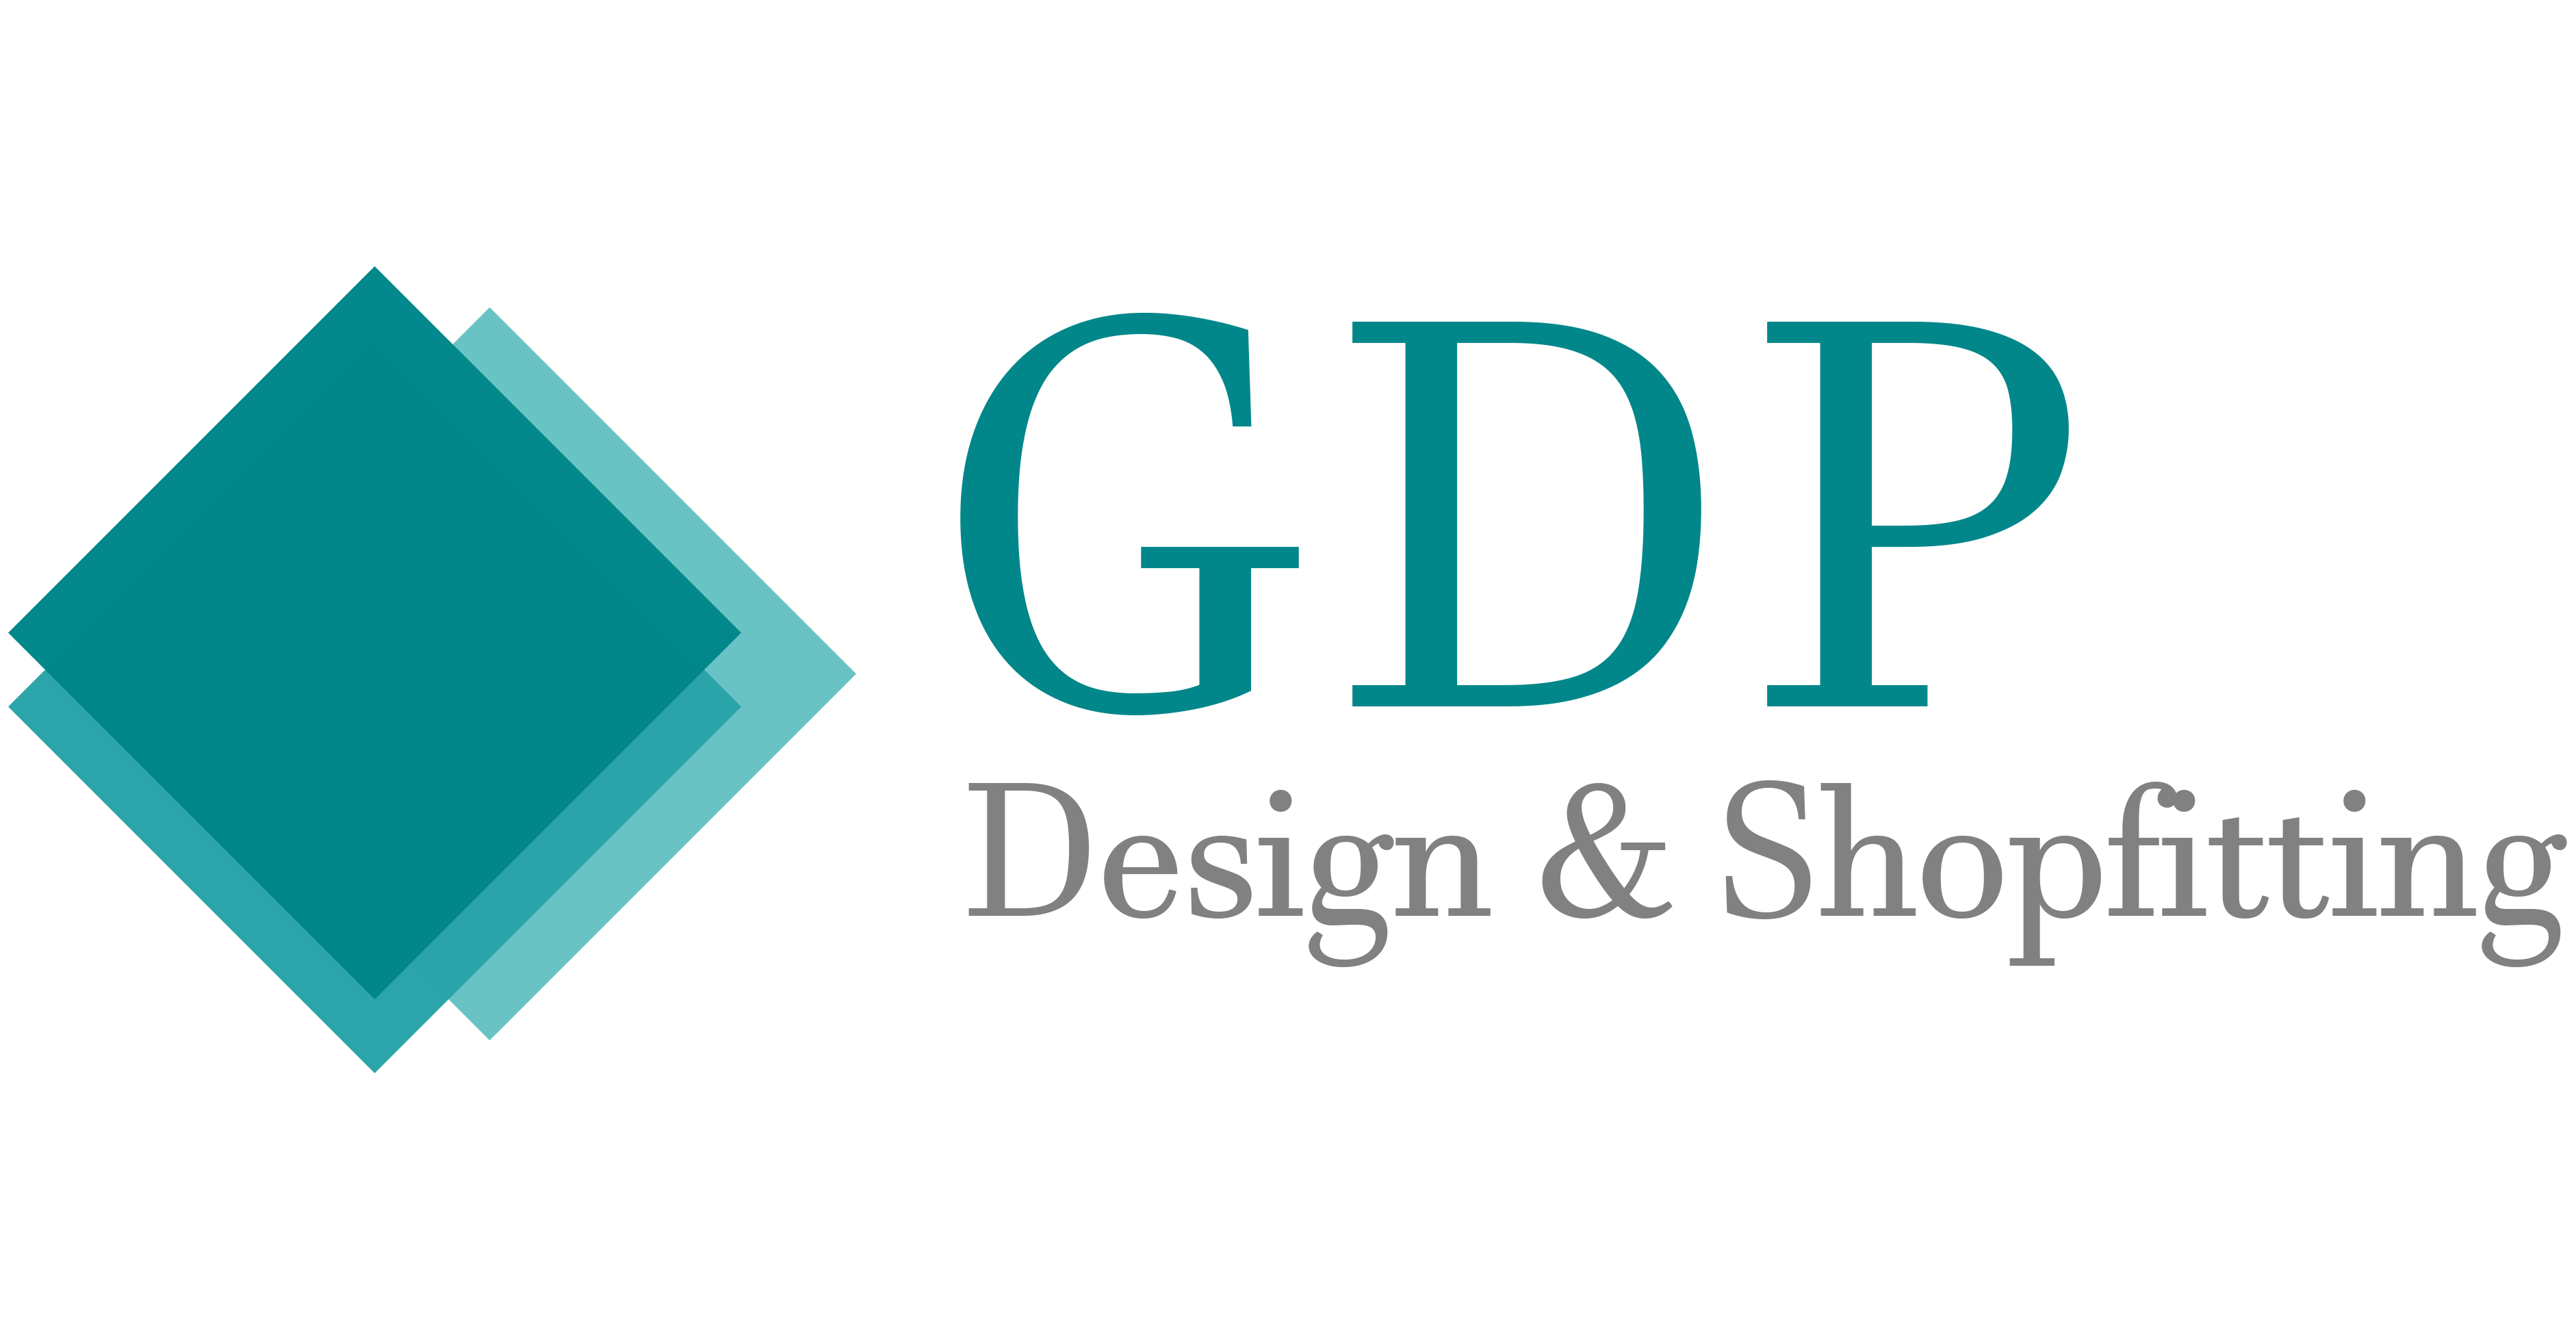 GDP Design & Shopfitting Ltd